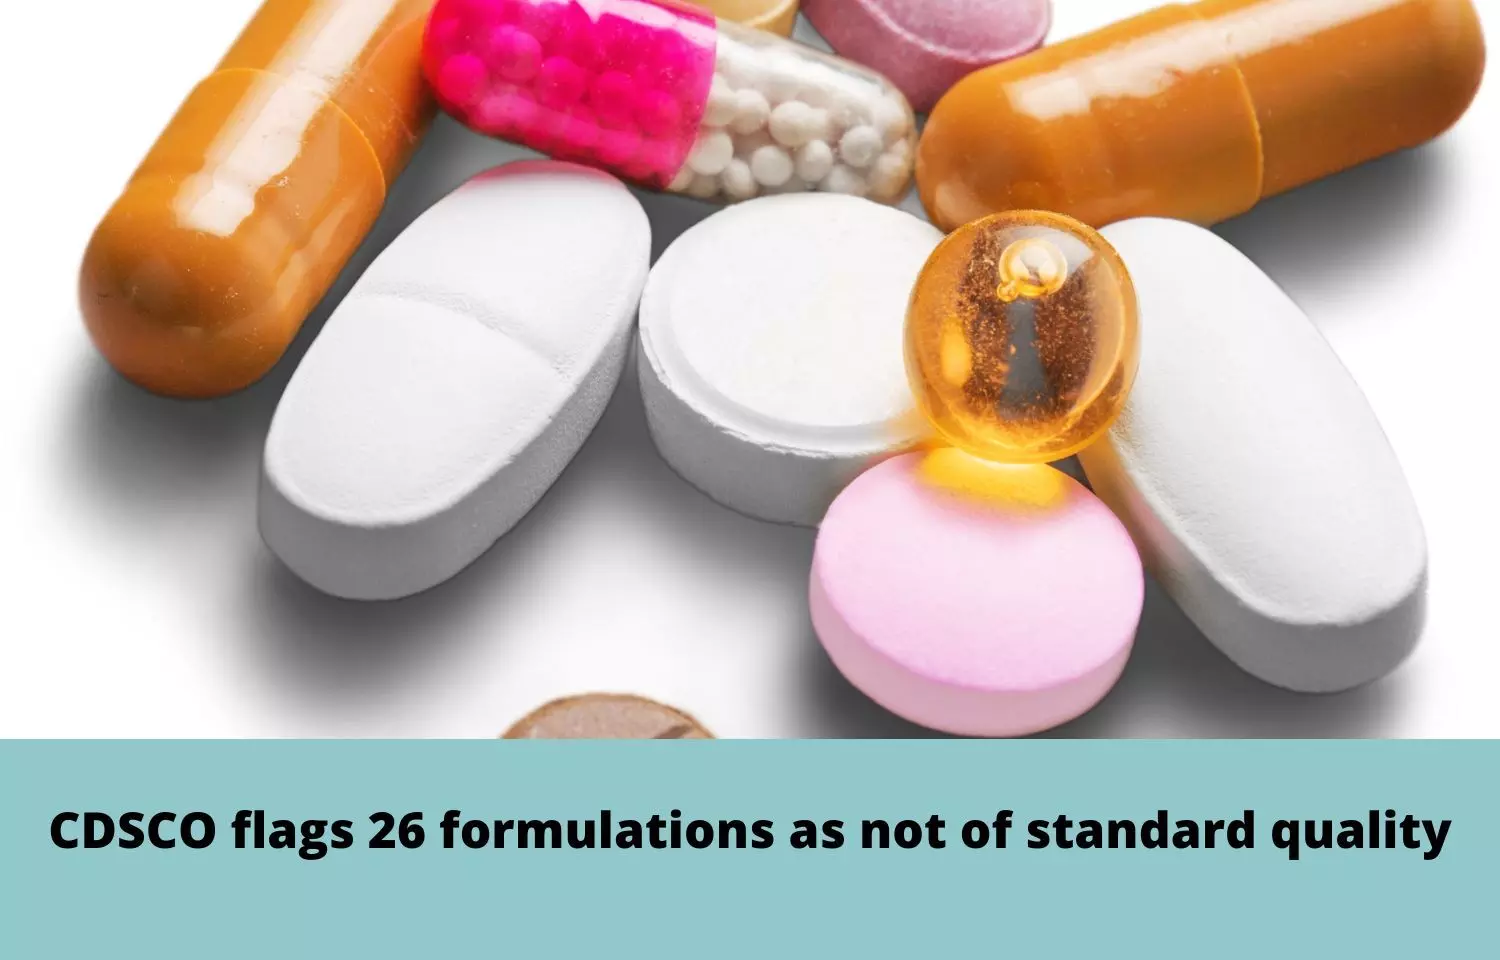 CDSCO flags 26 formulations as not of standard quality